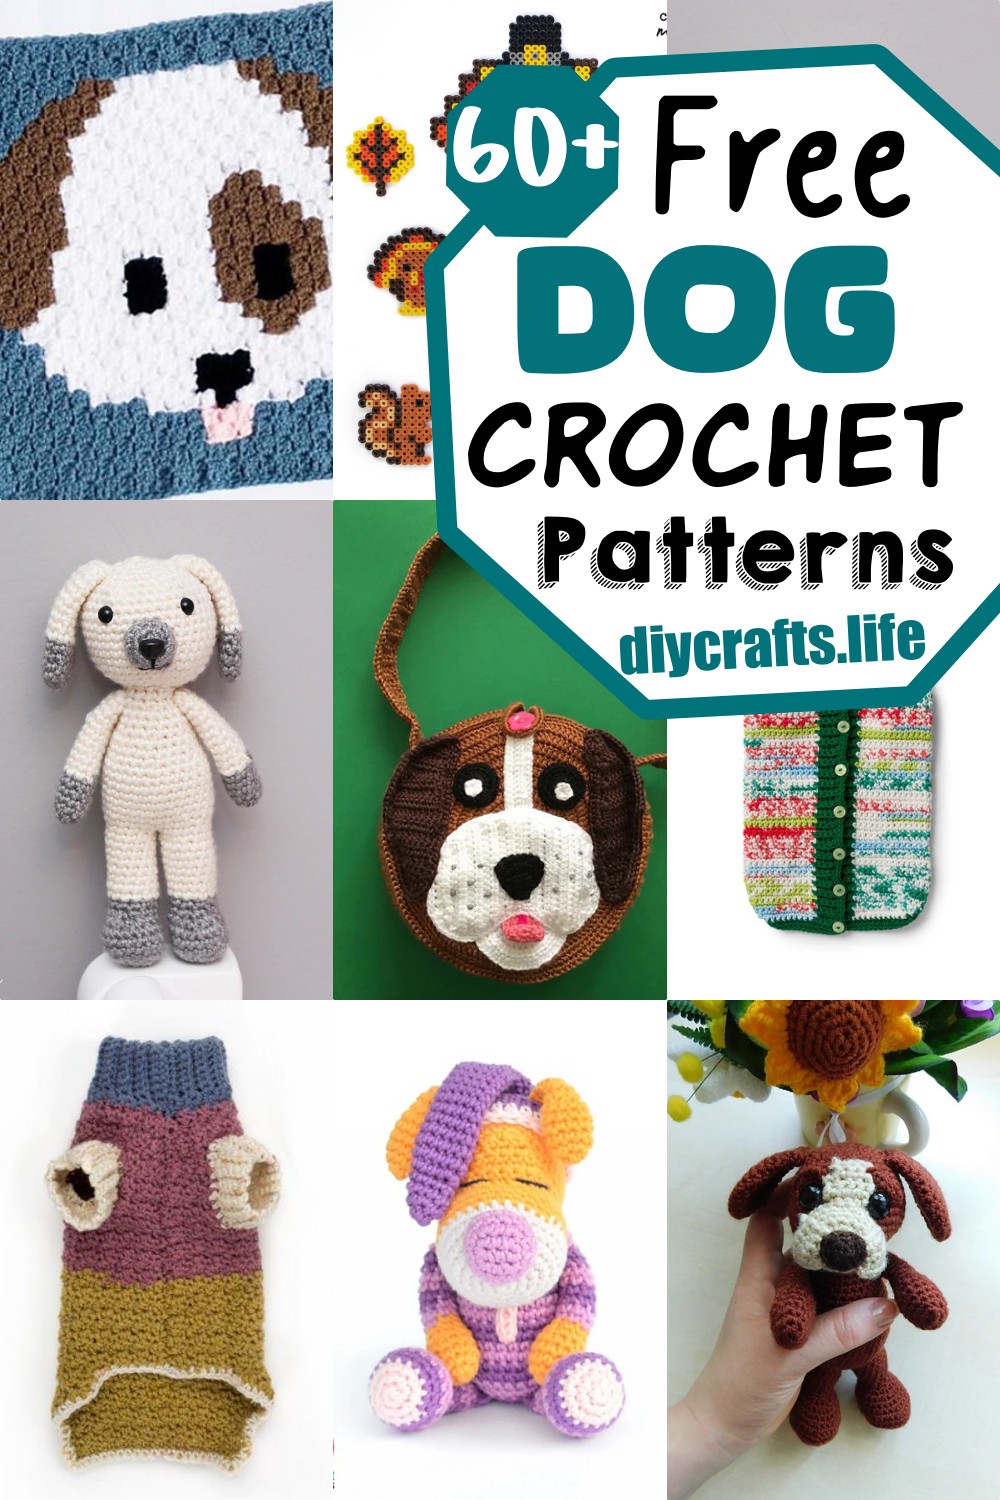 60+ Free Crochet Dog Patterns